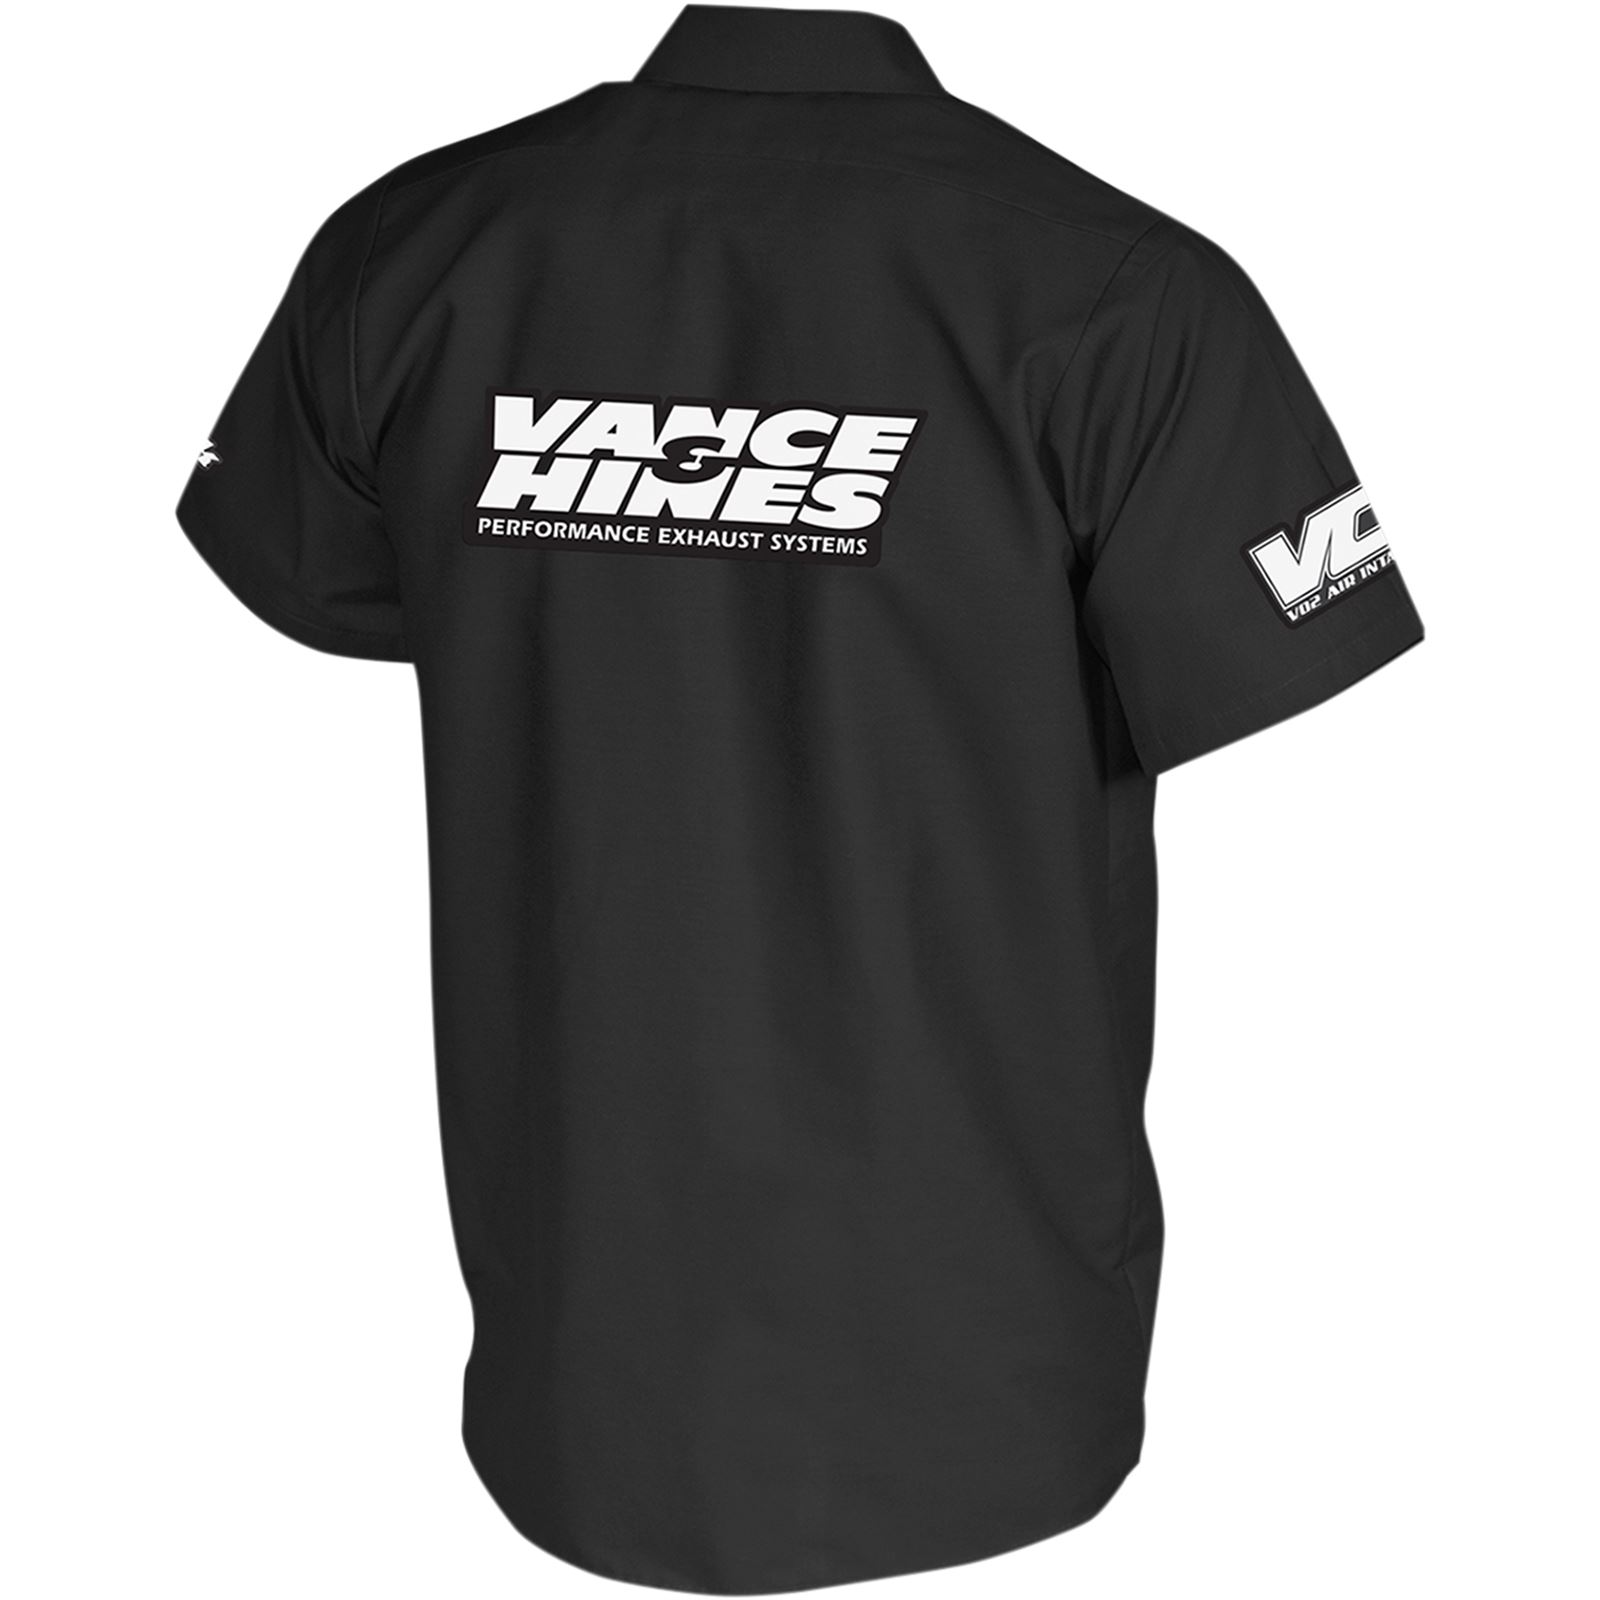 Throttle Threads Vance & Hines Shirt - Black Large